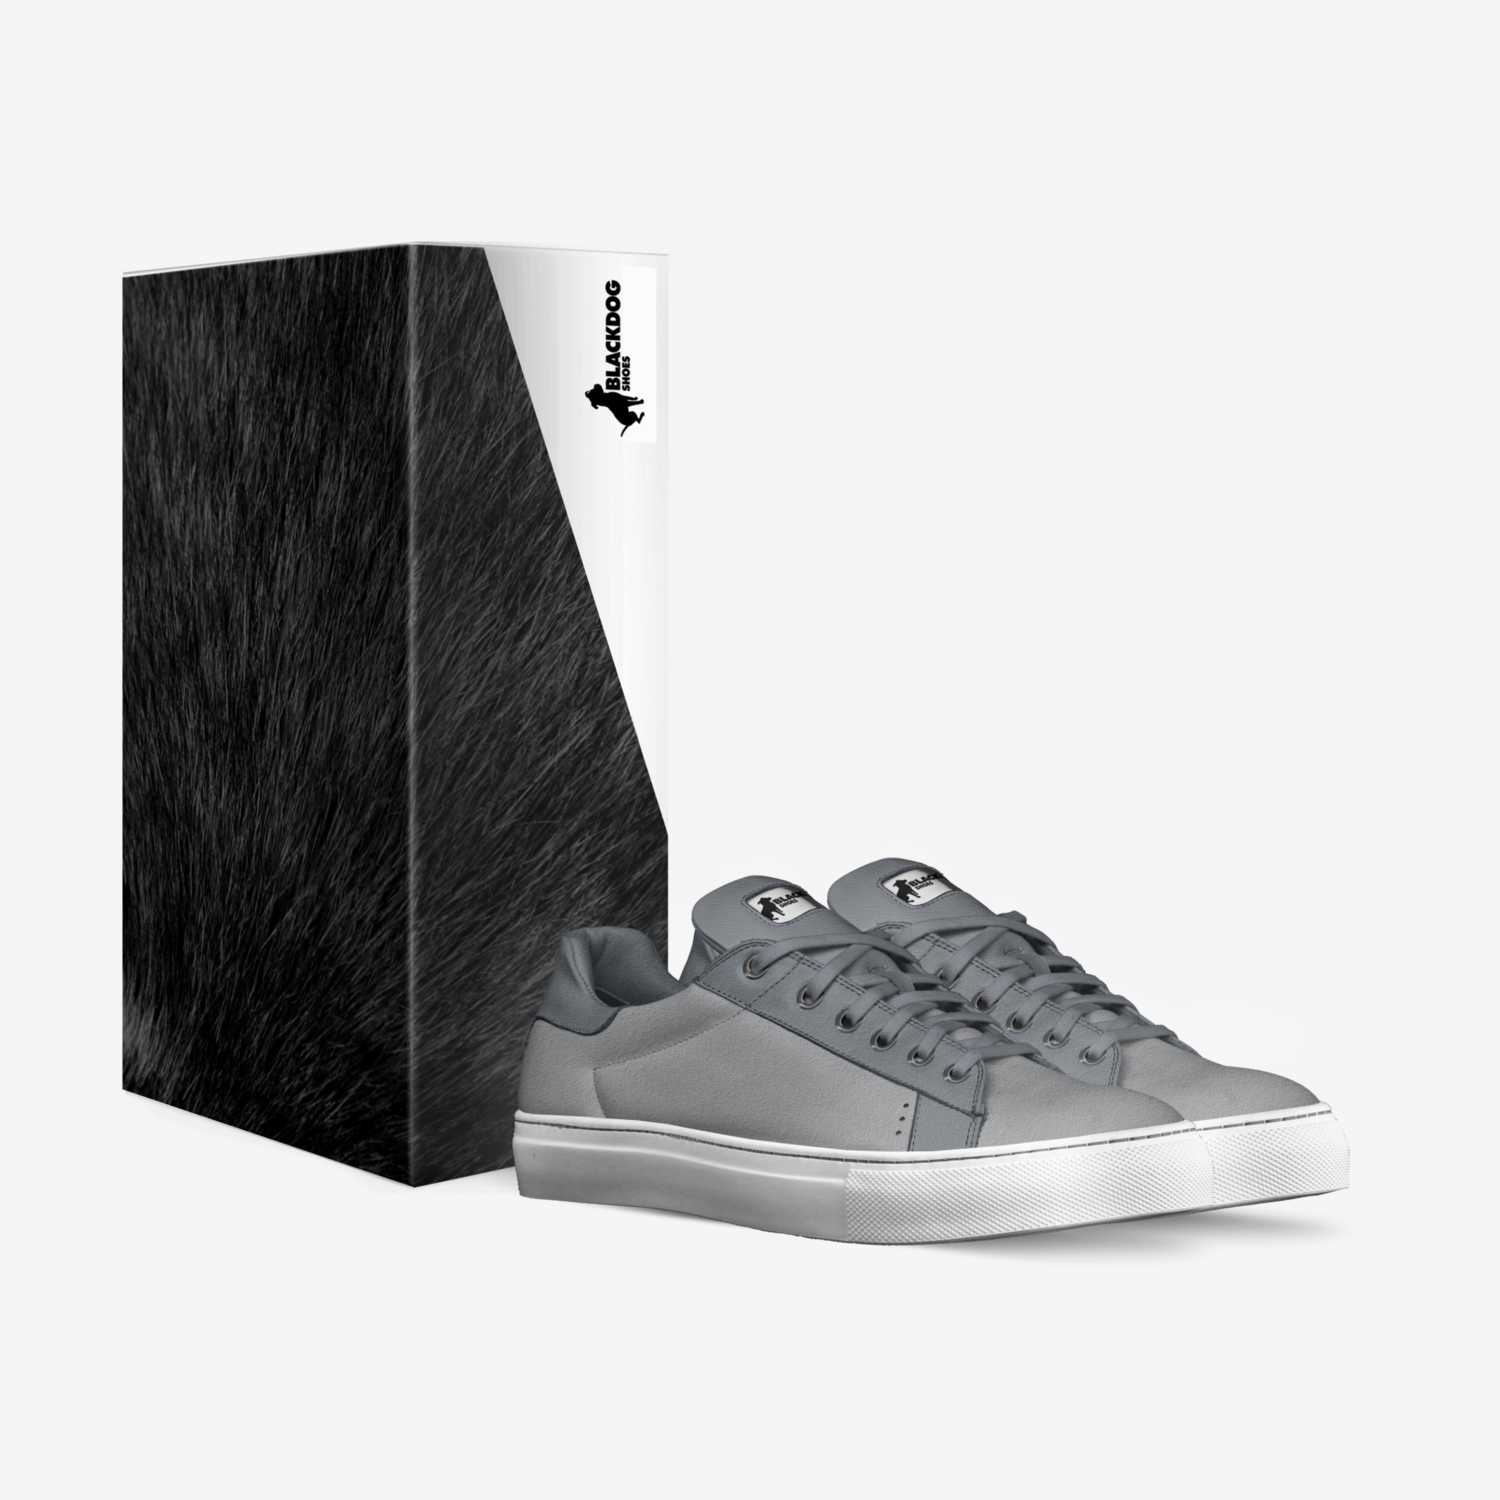 Grey Pittie custom made in Italy shoes by Jordan Aschwege | Box view